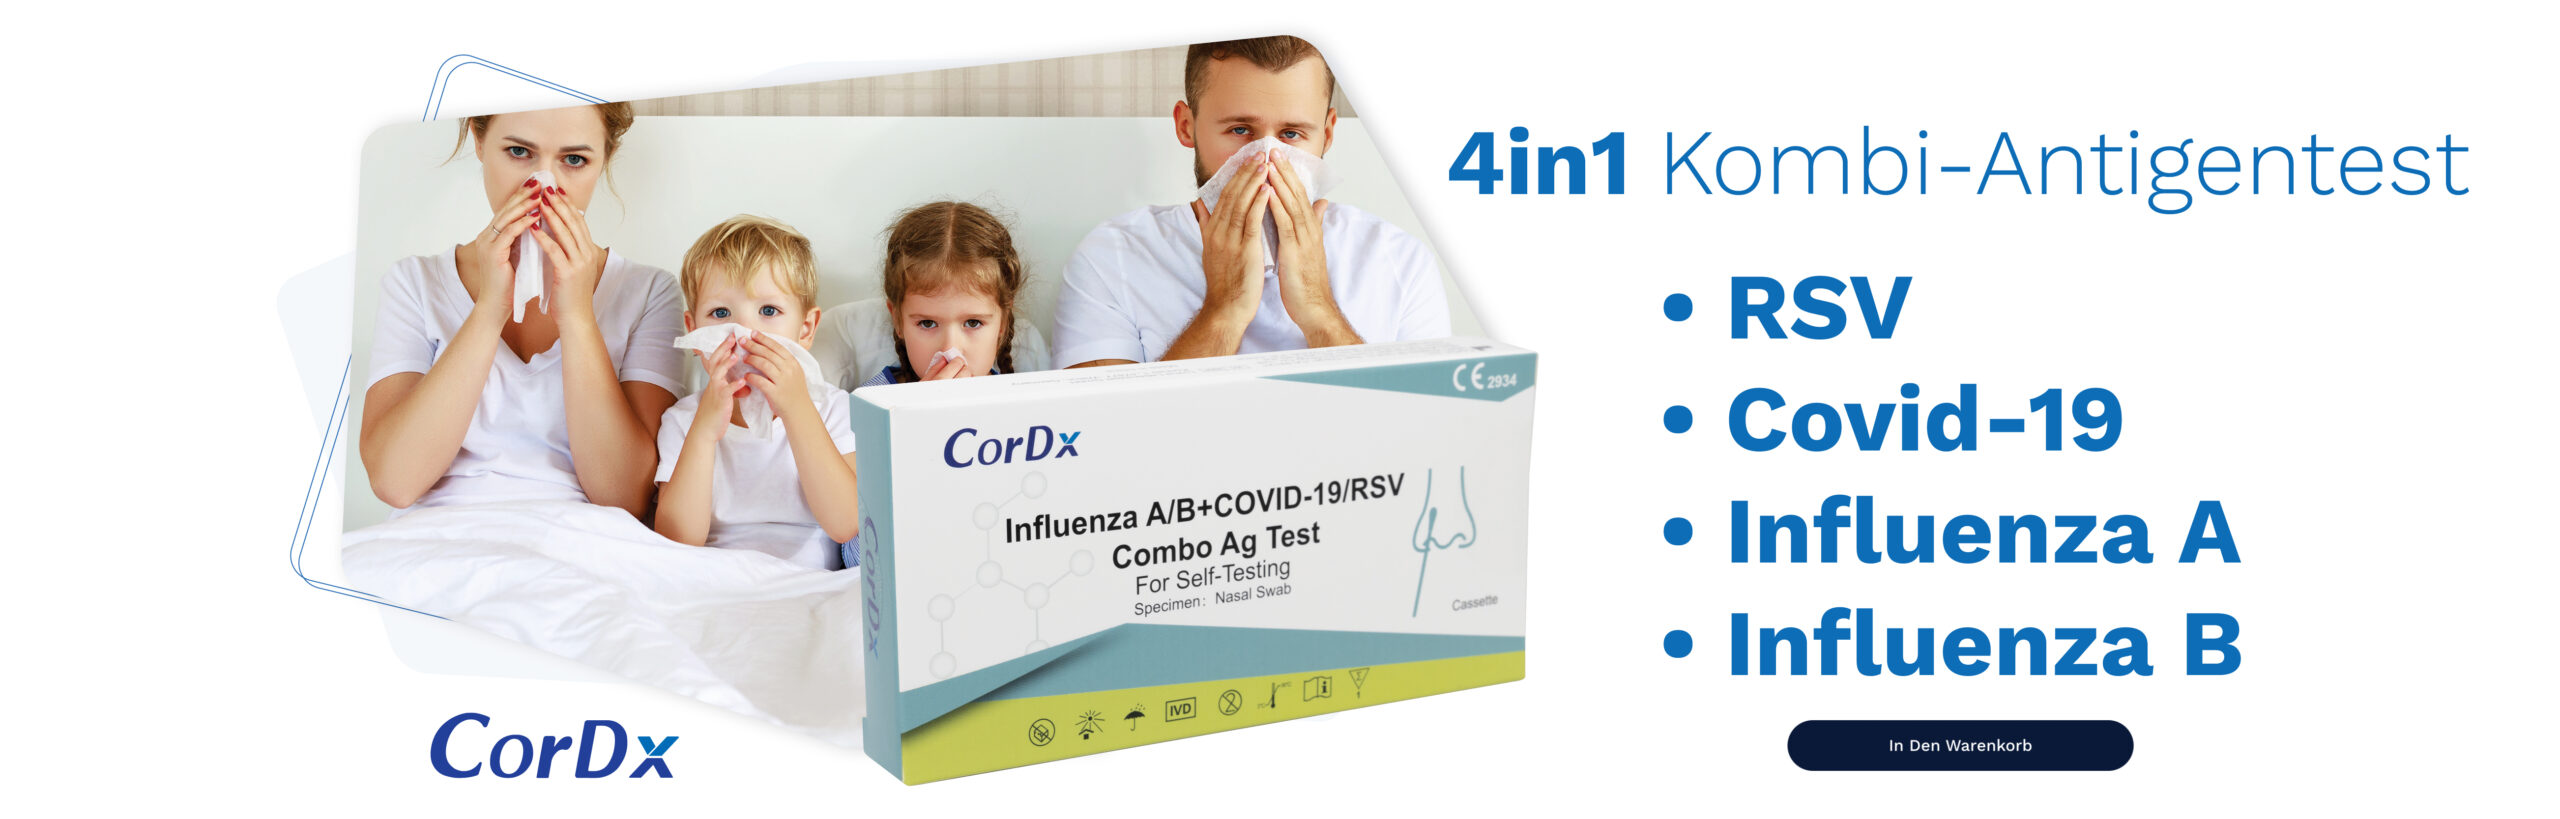 4in1 | Antigentest | Influenza A/B + COVID-19 + RSV